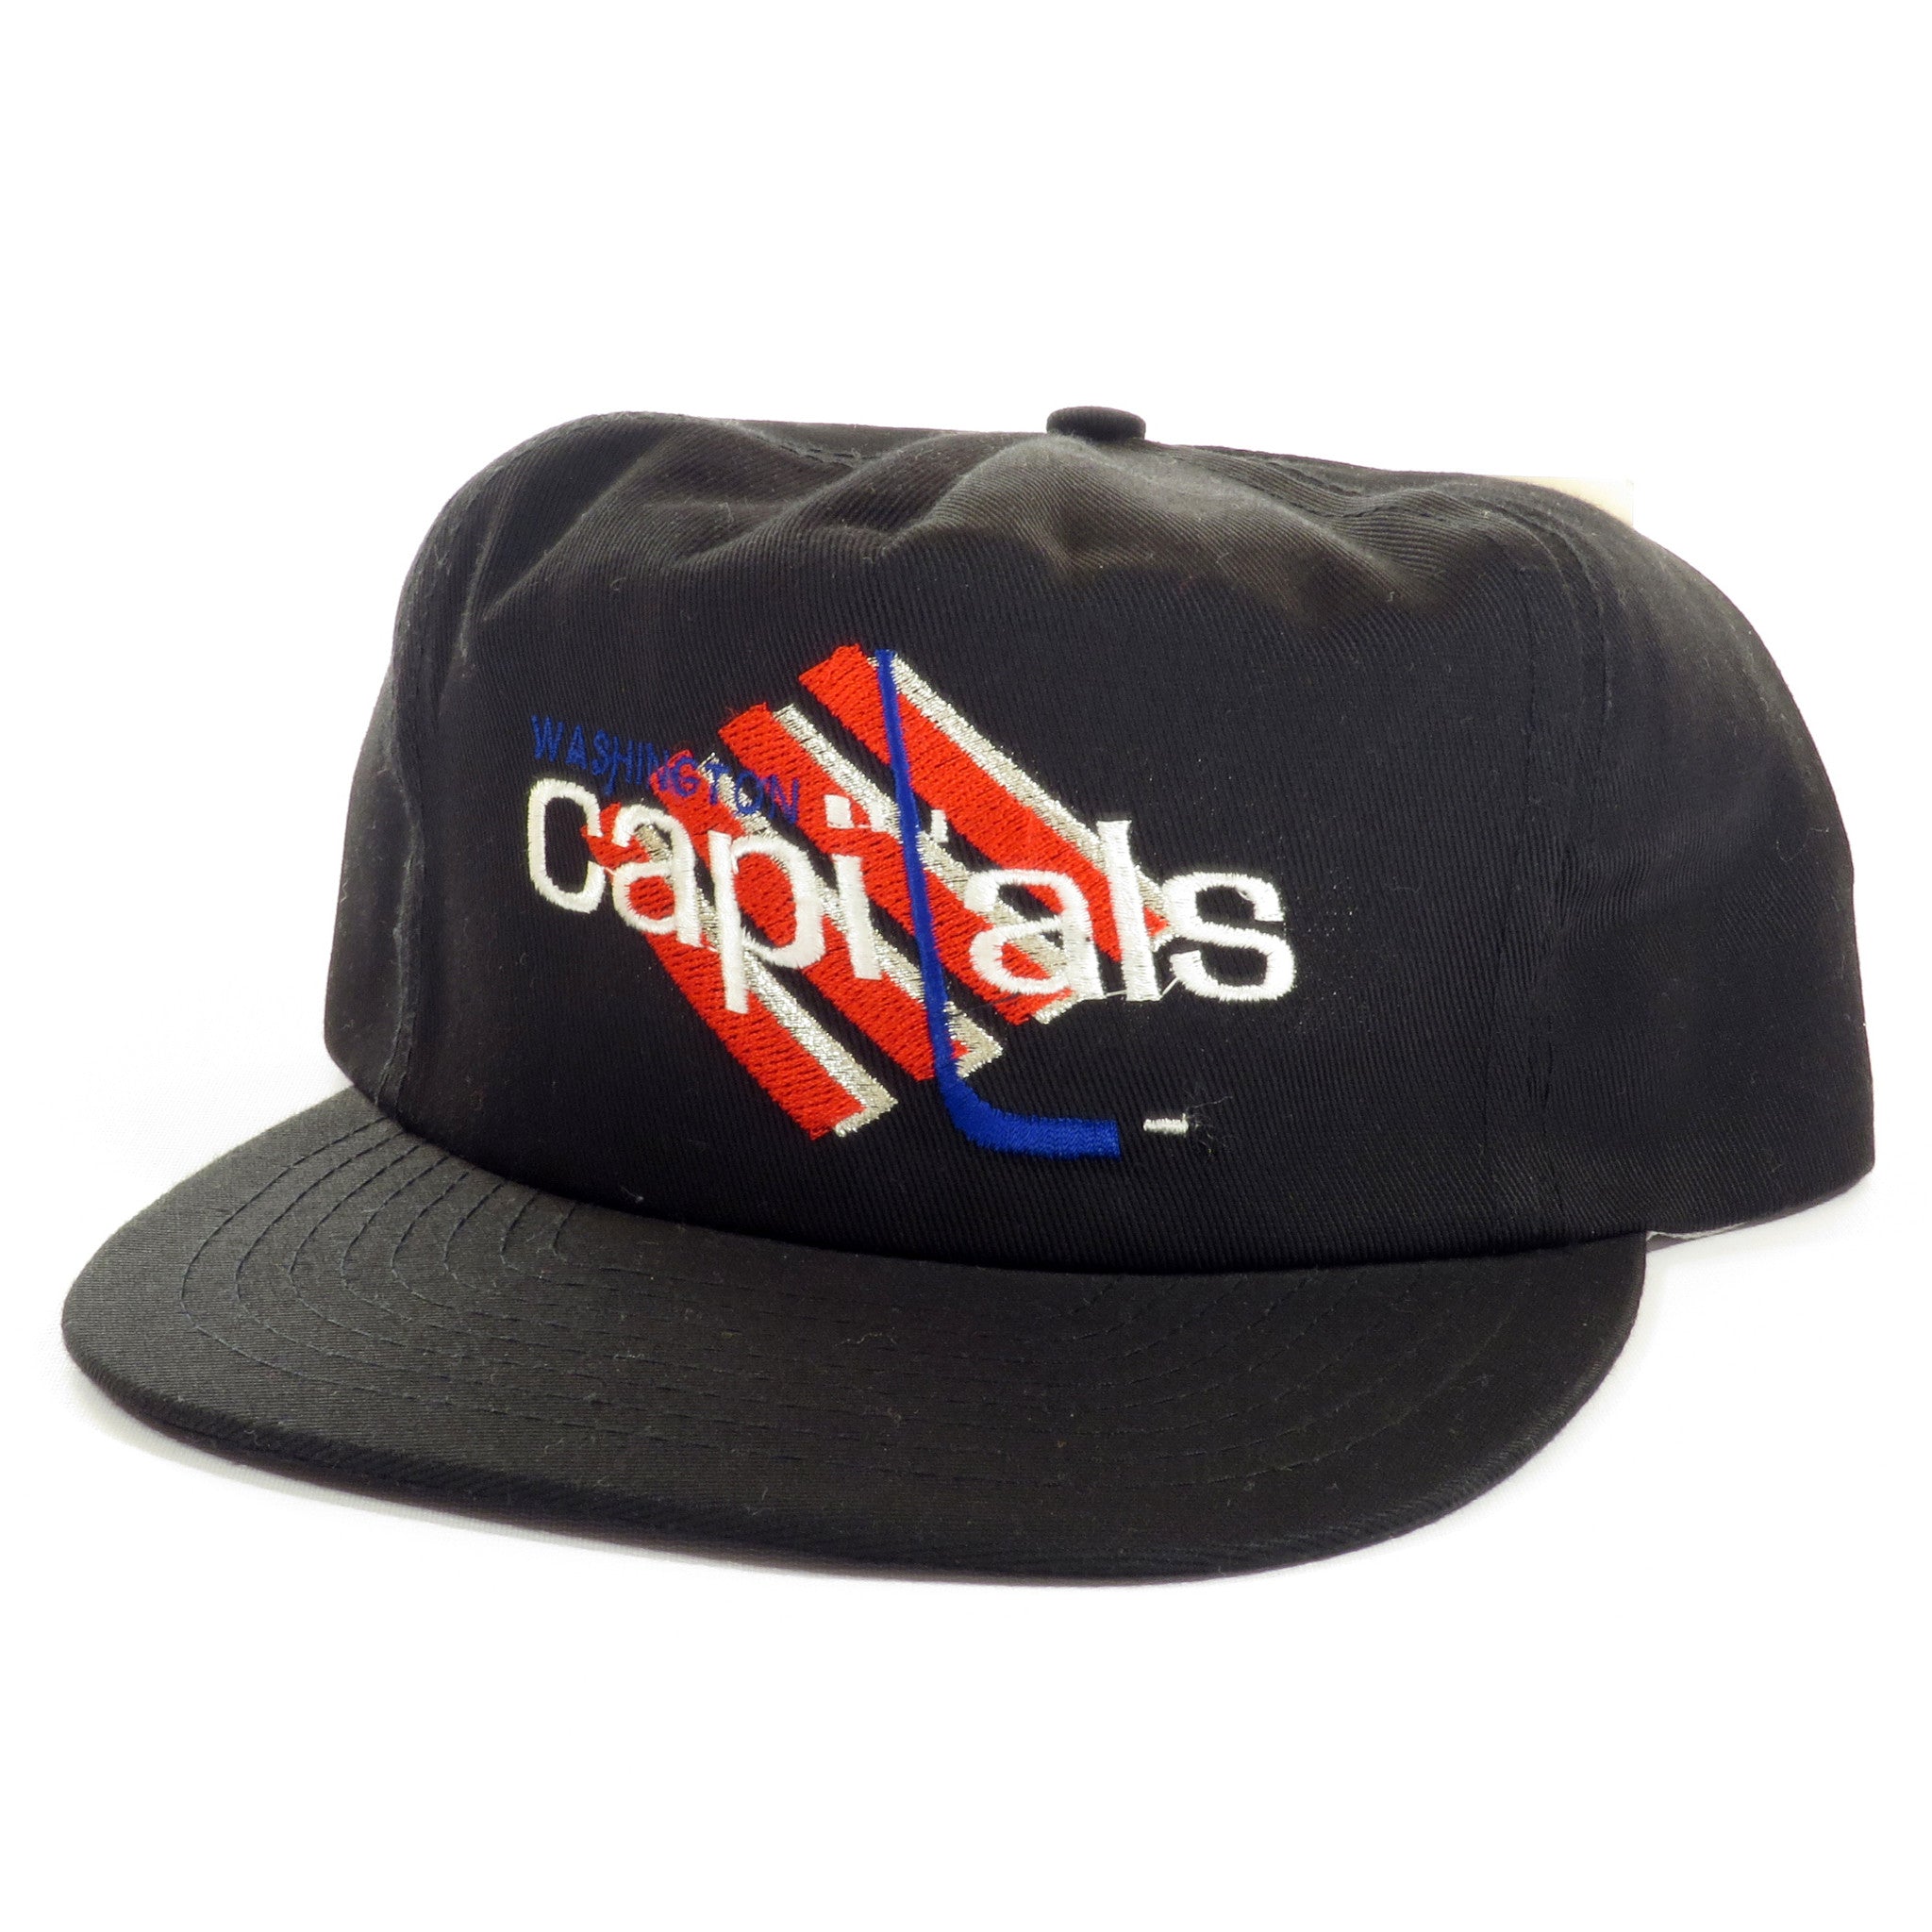 Washington Capitals Snapback Hat